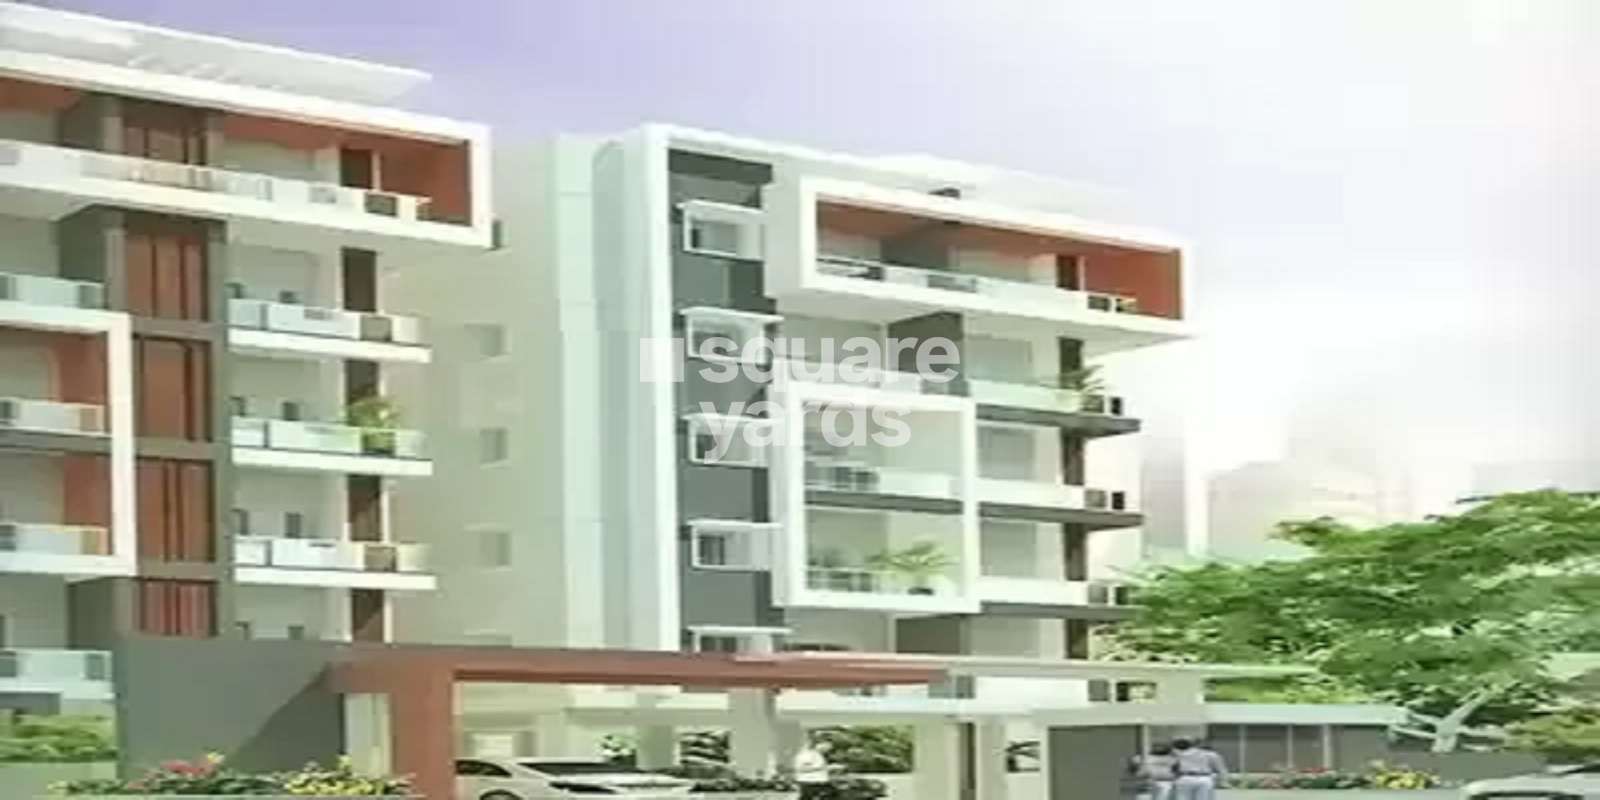 Usha Mahalaxmi Apartments Cover Image